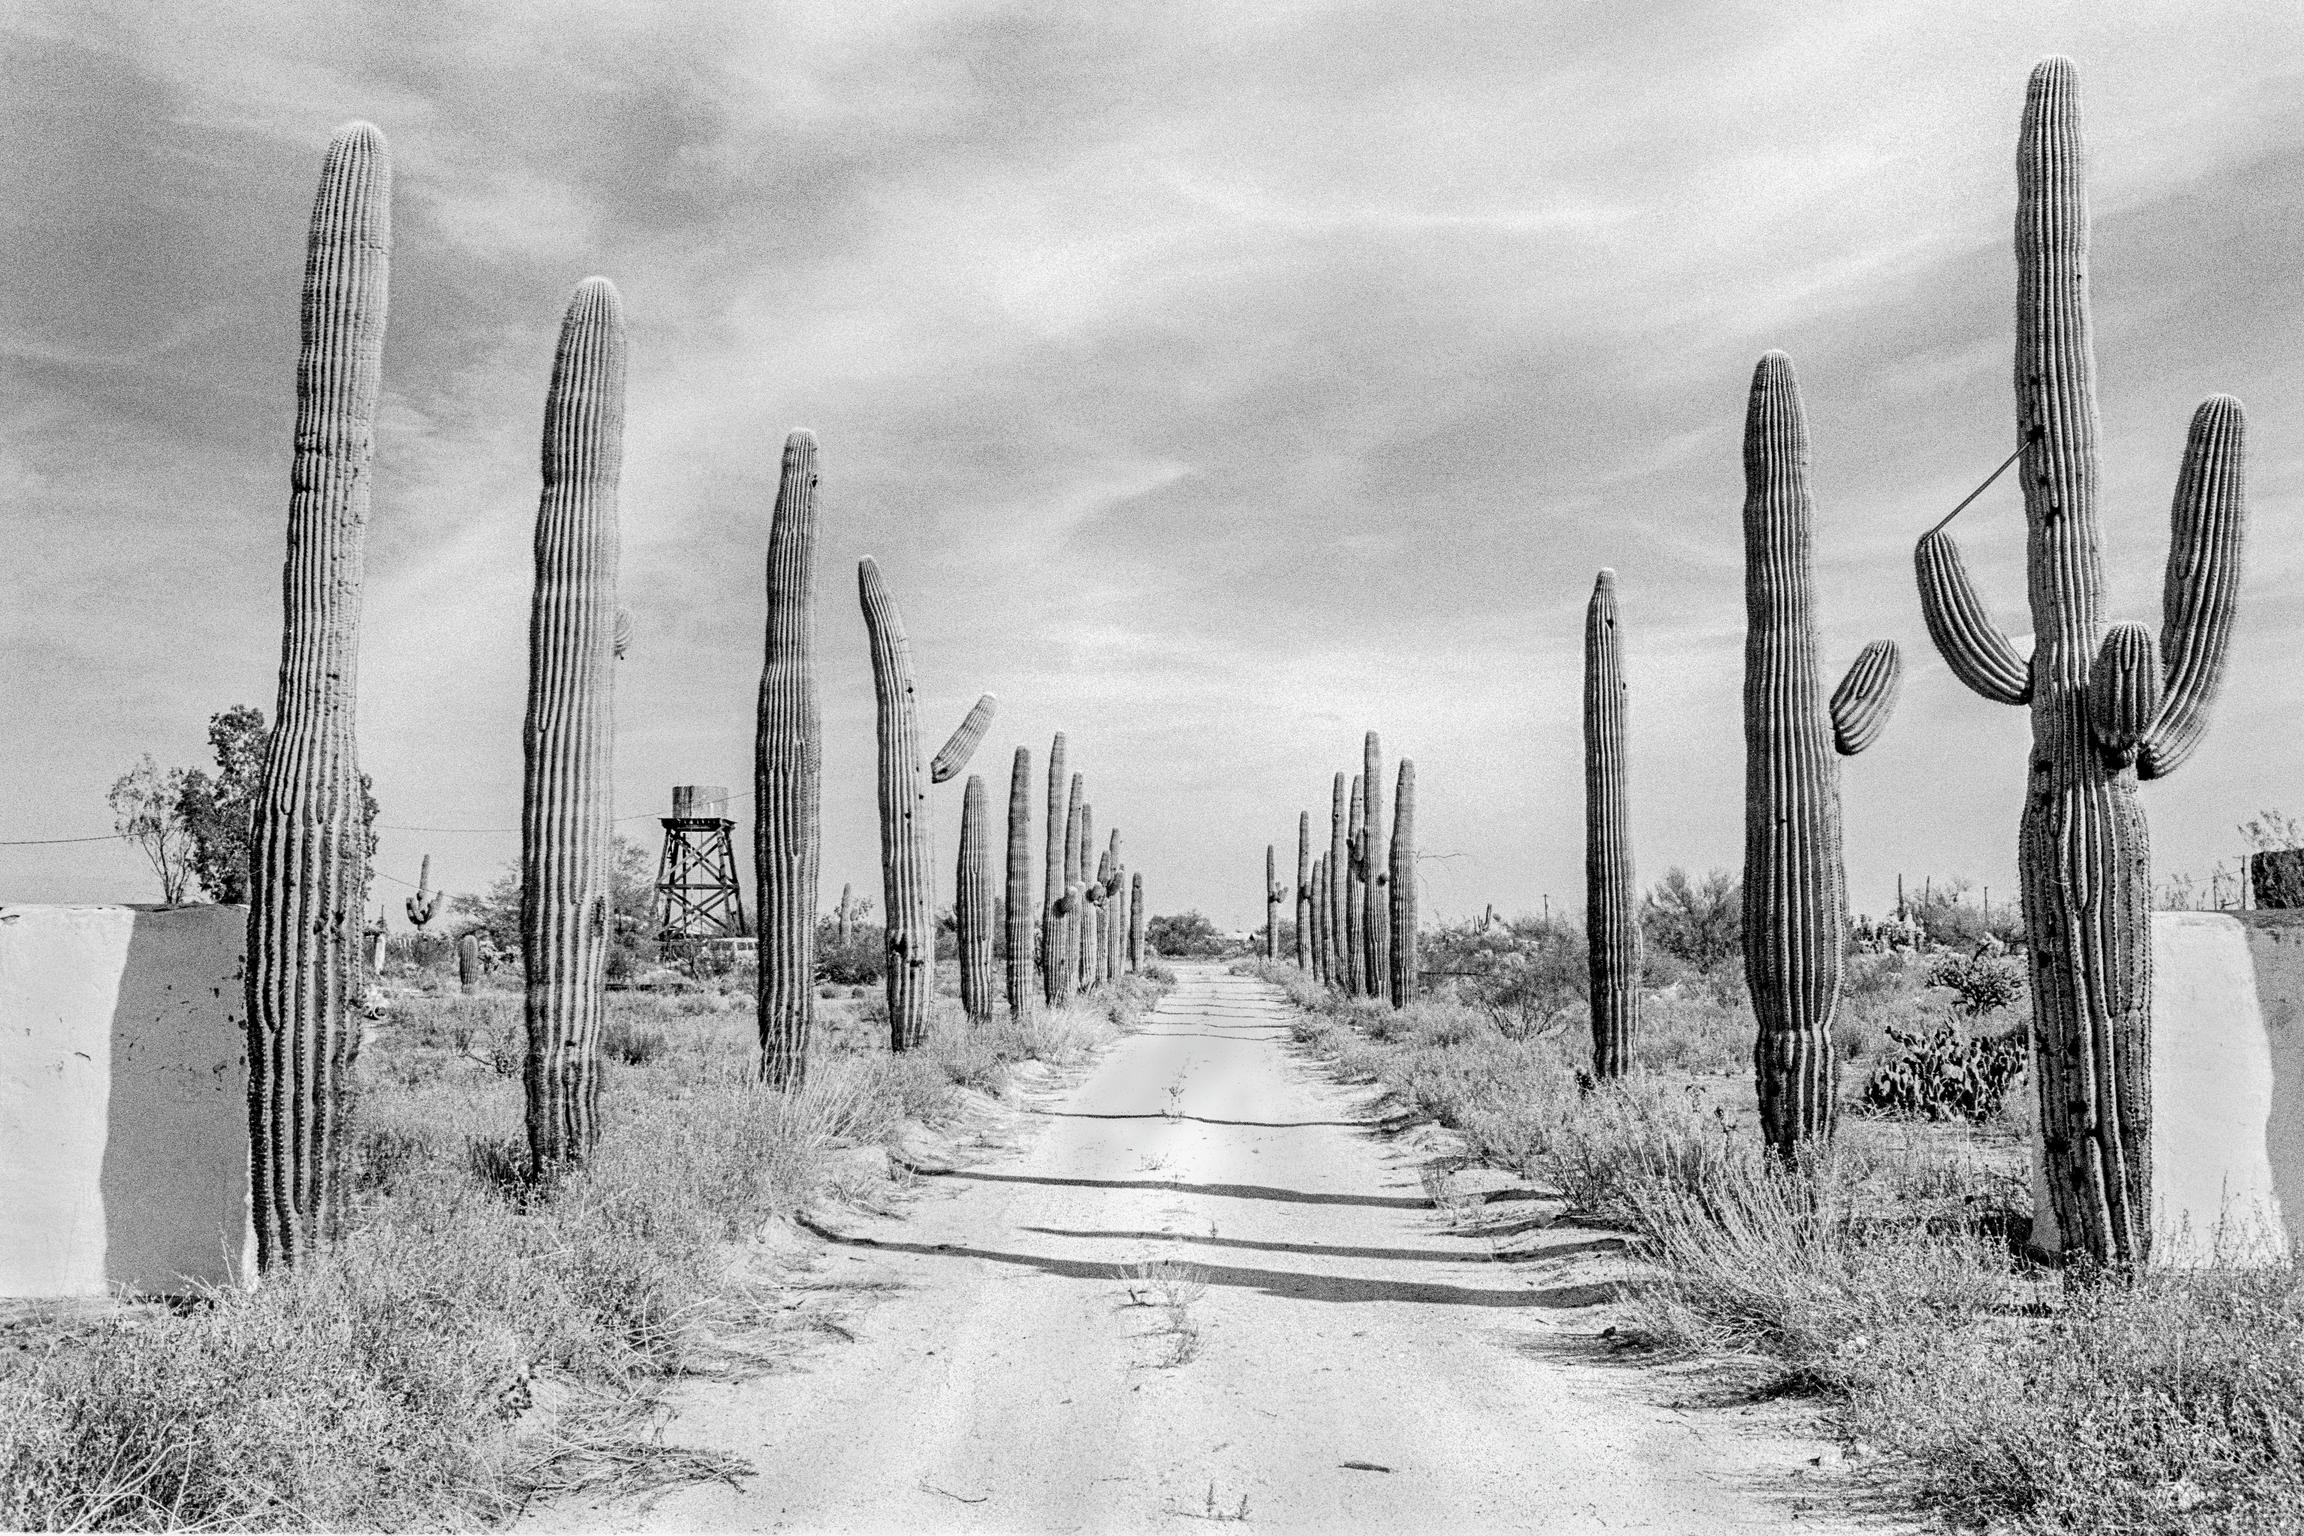 Cactus Forest Road. Florence, Arizona USA